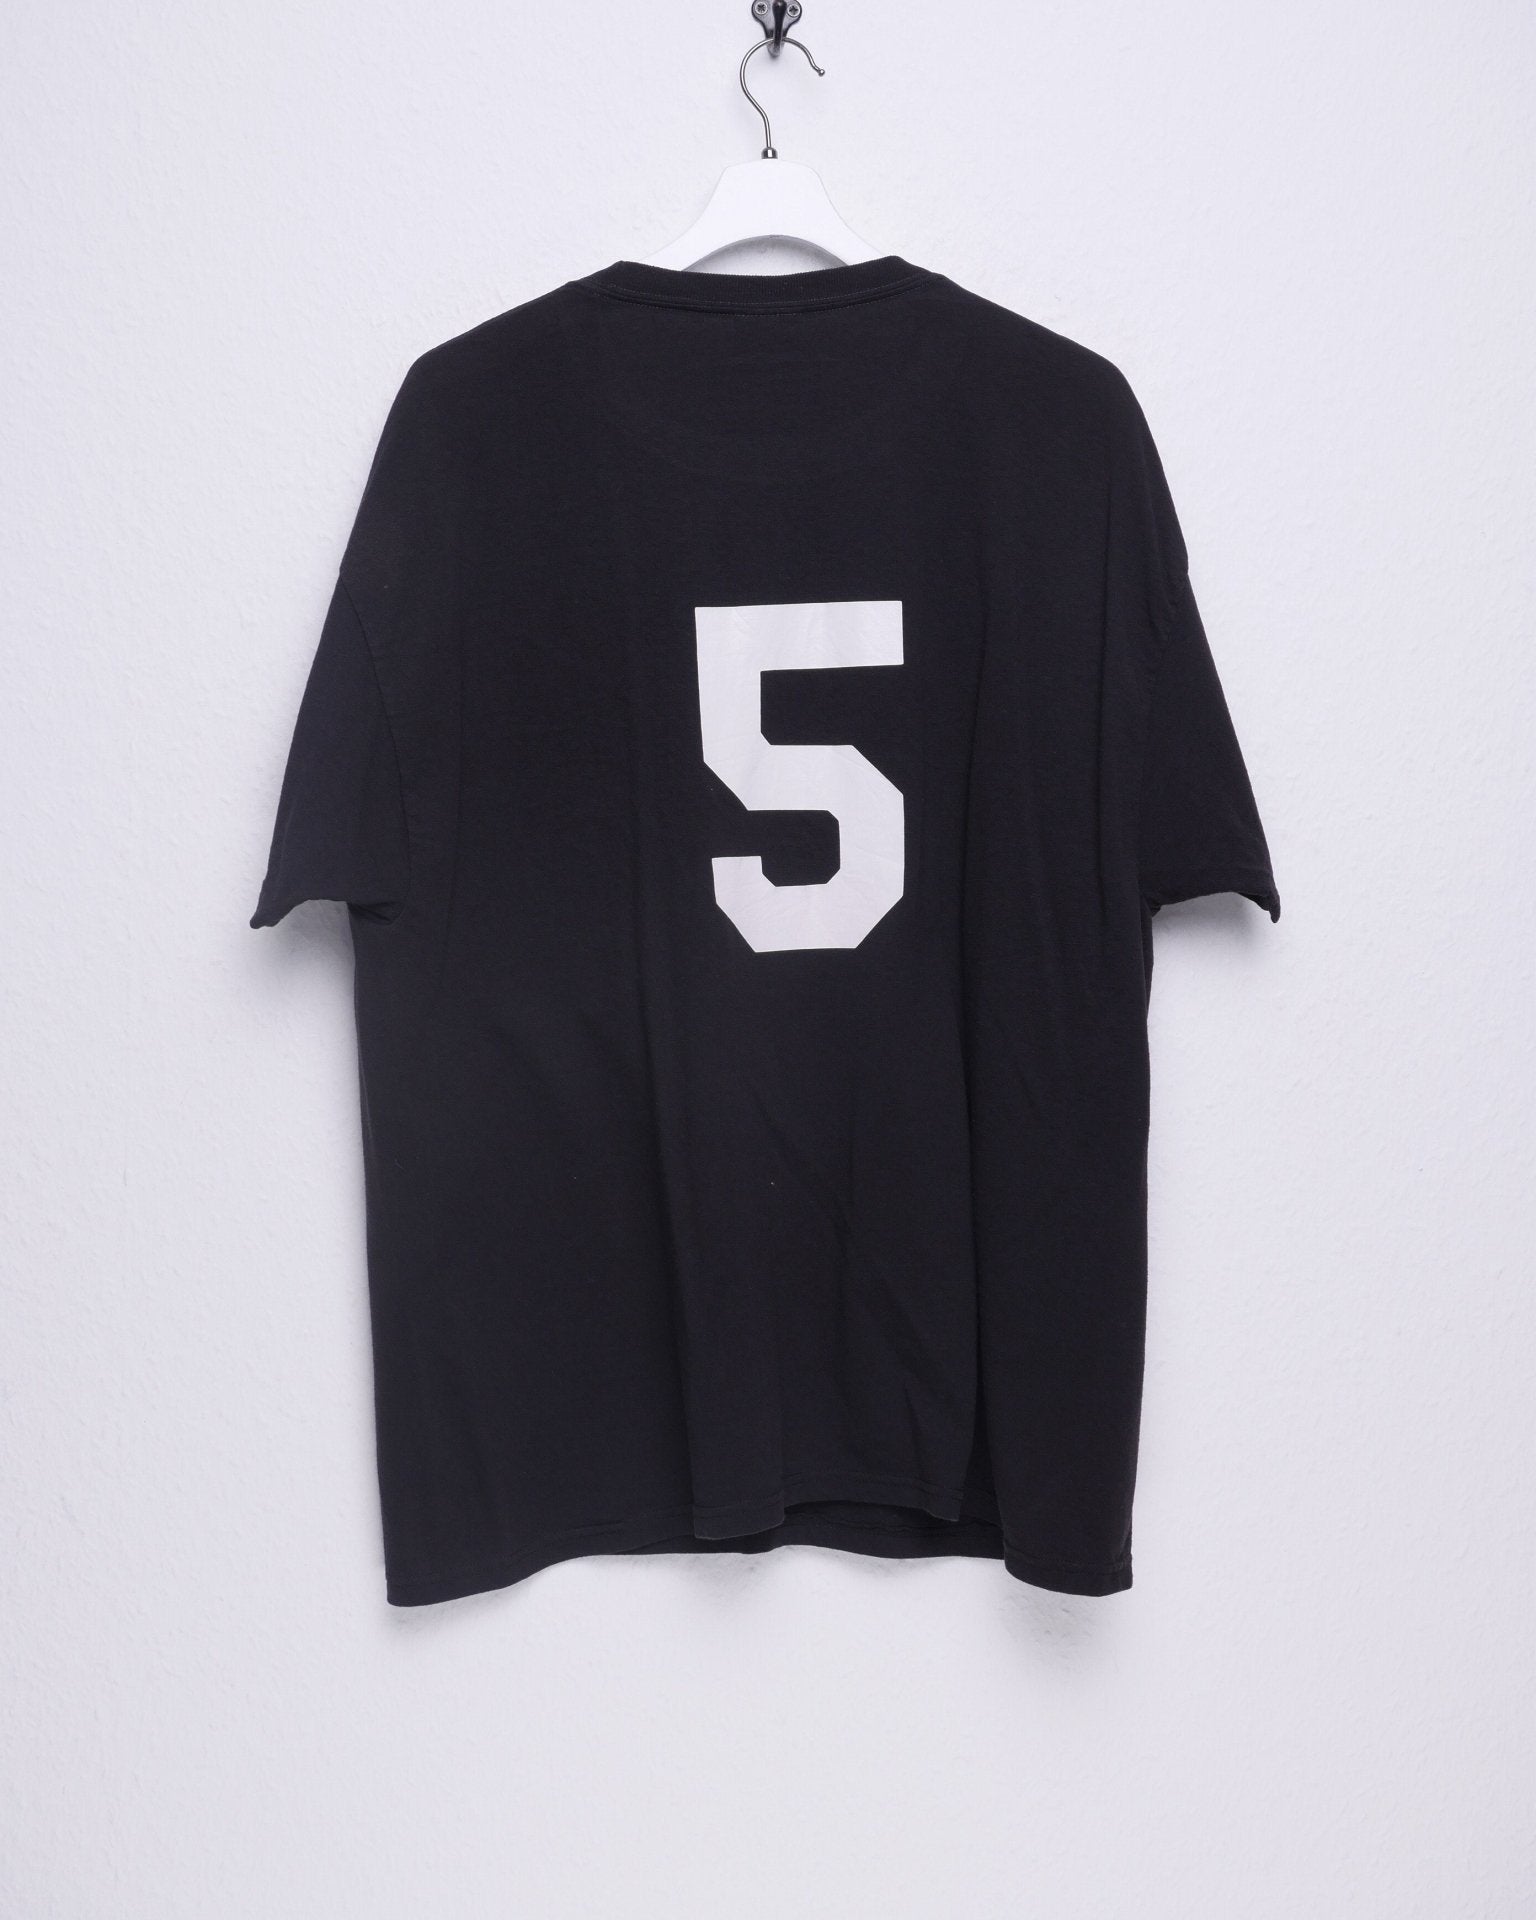 Cobblestone Park Basketball League 2011 printed Logo black Shirt - Peeces